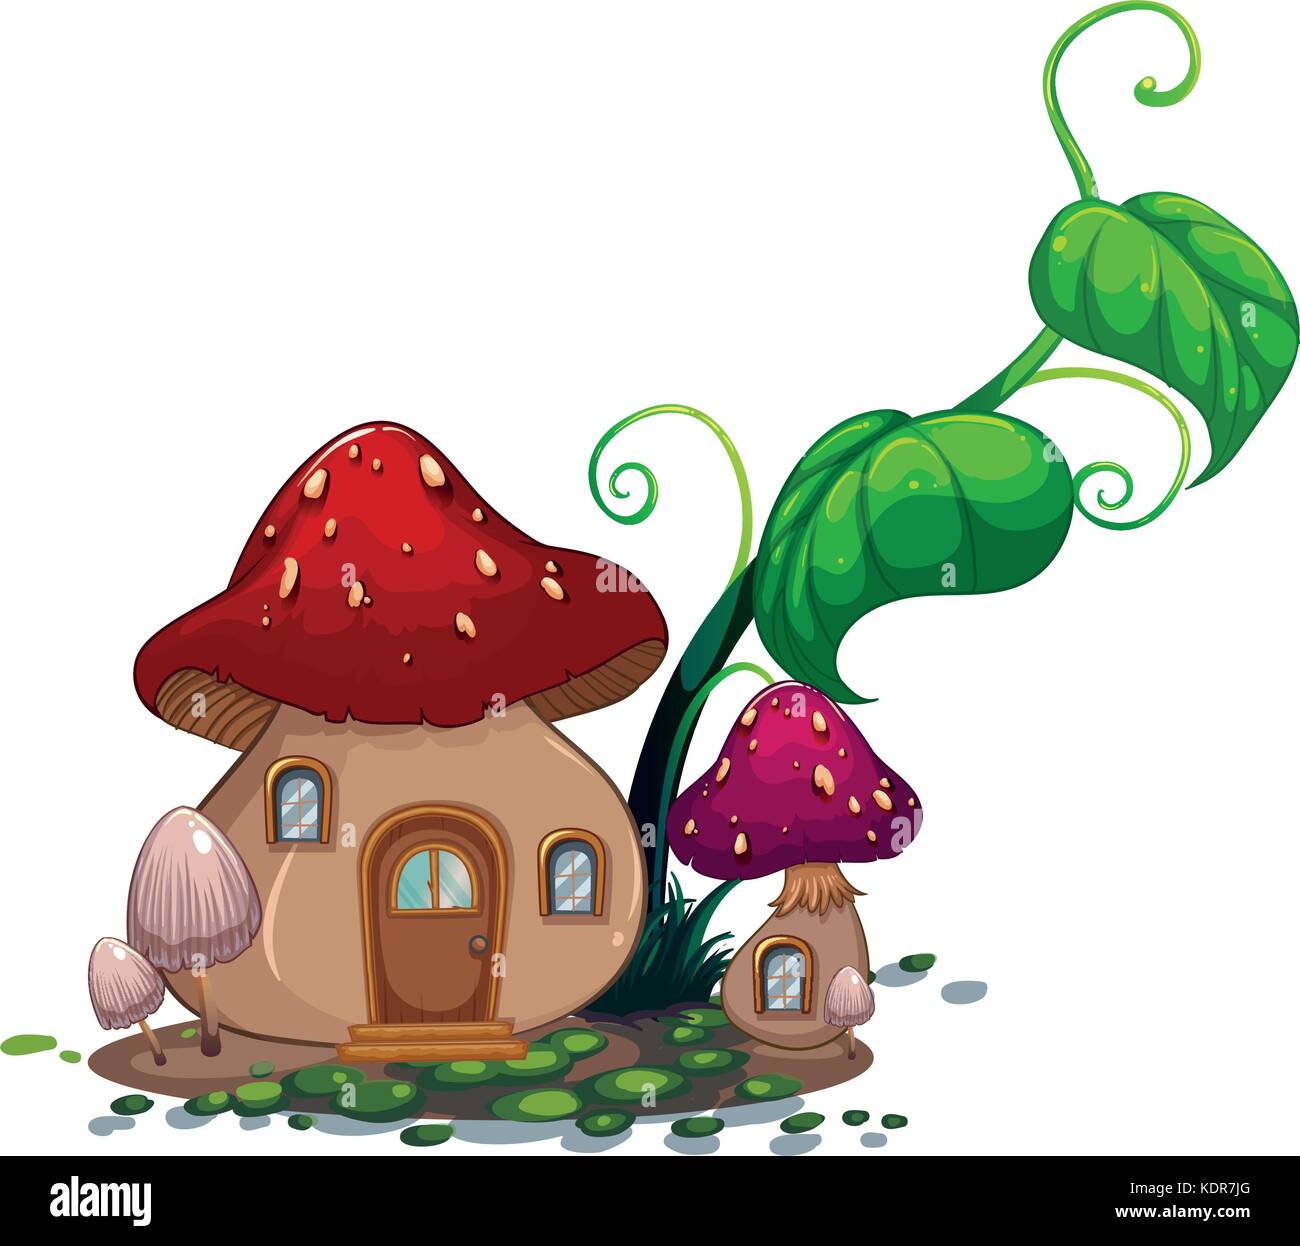 Mushroom house with green leaves illustration Stock Vector Image & Art -  Alamy